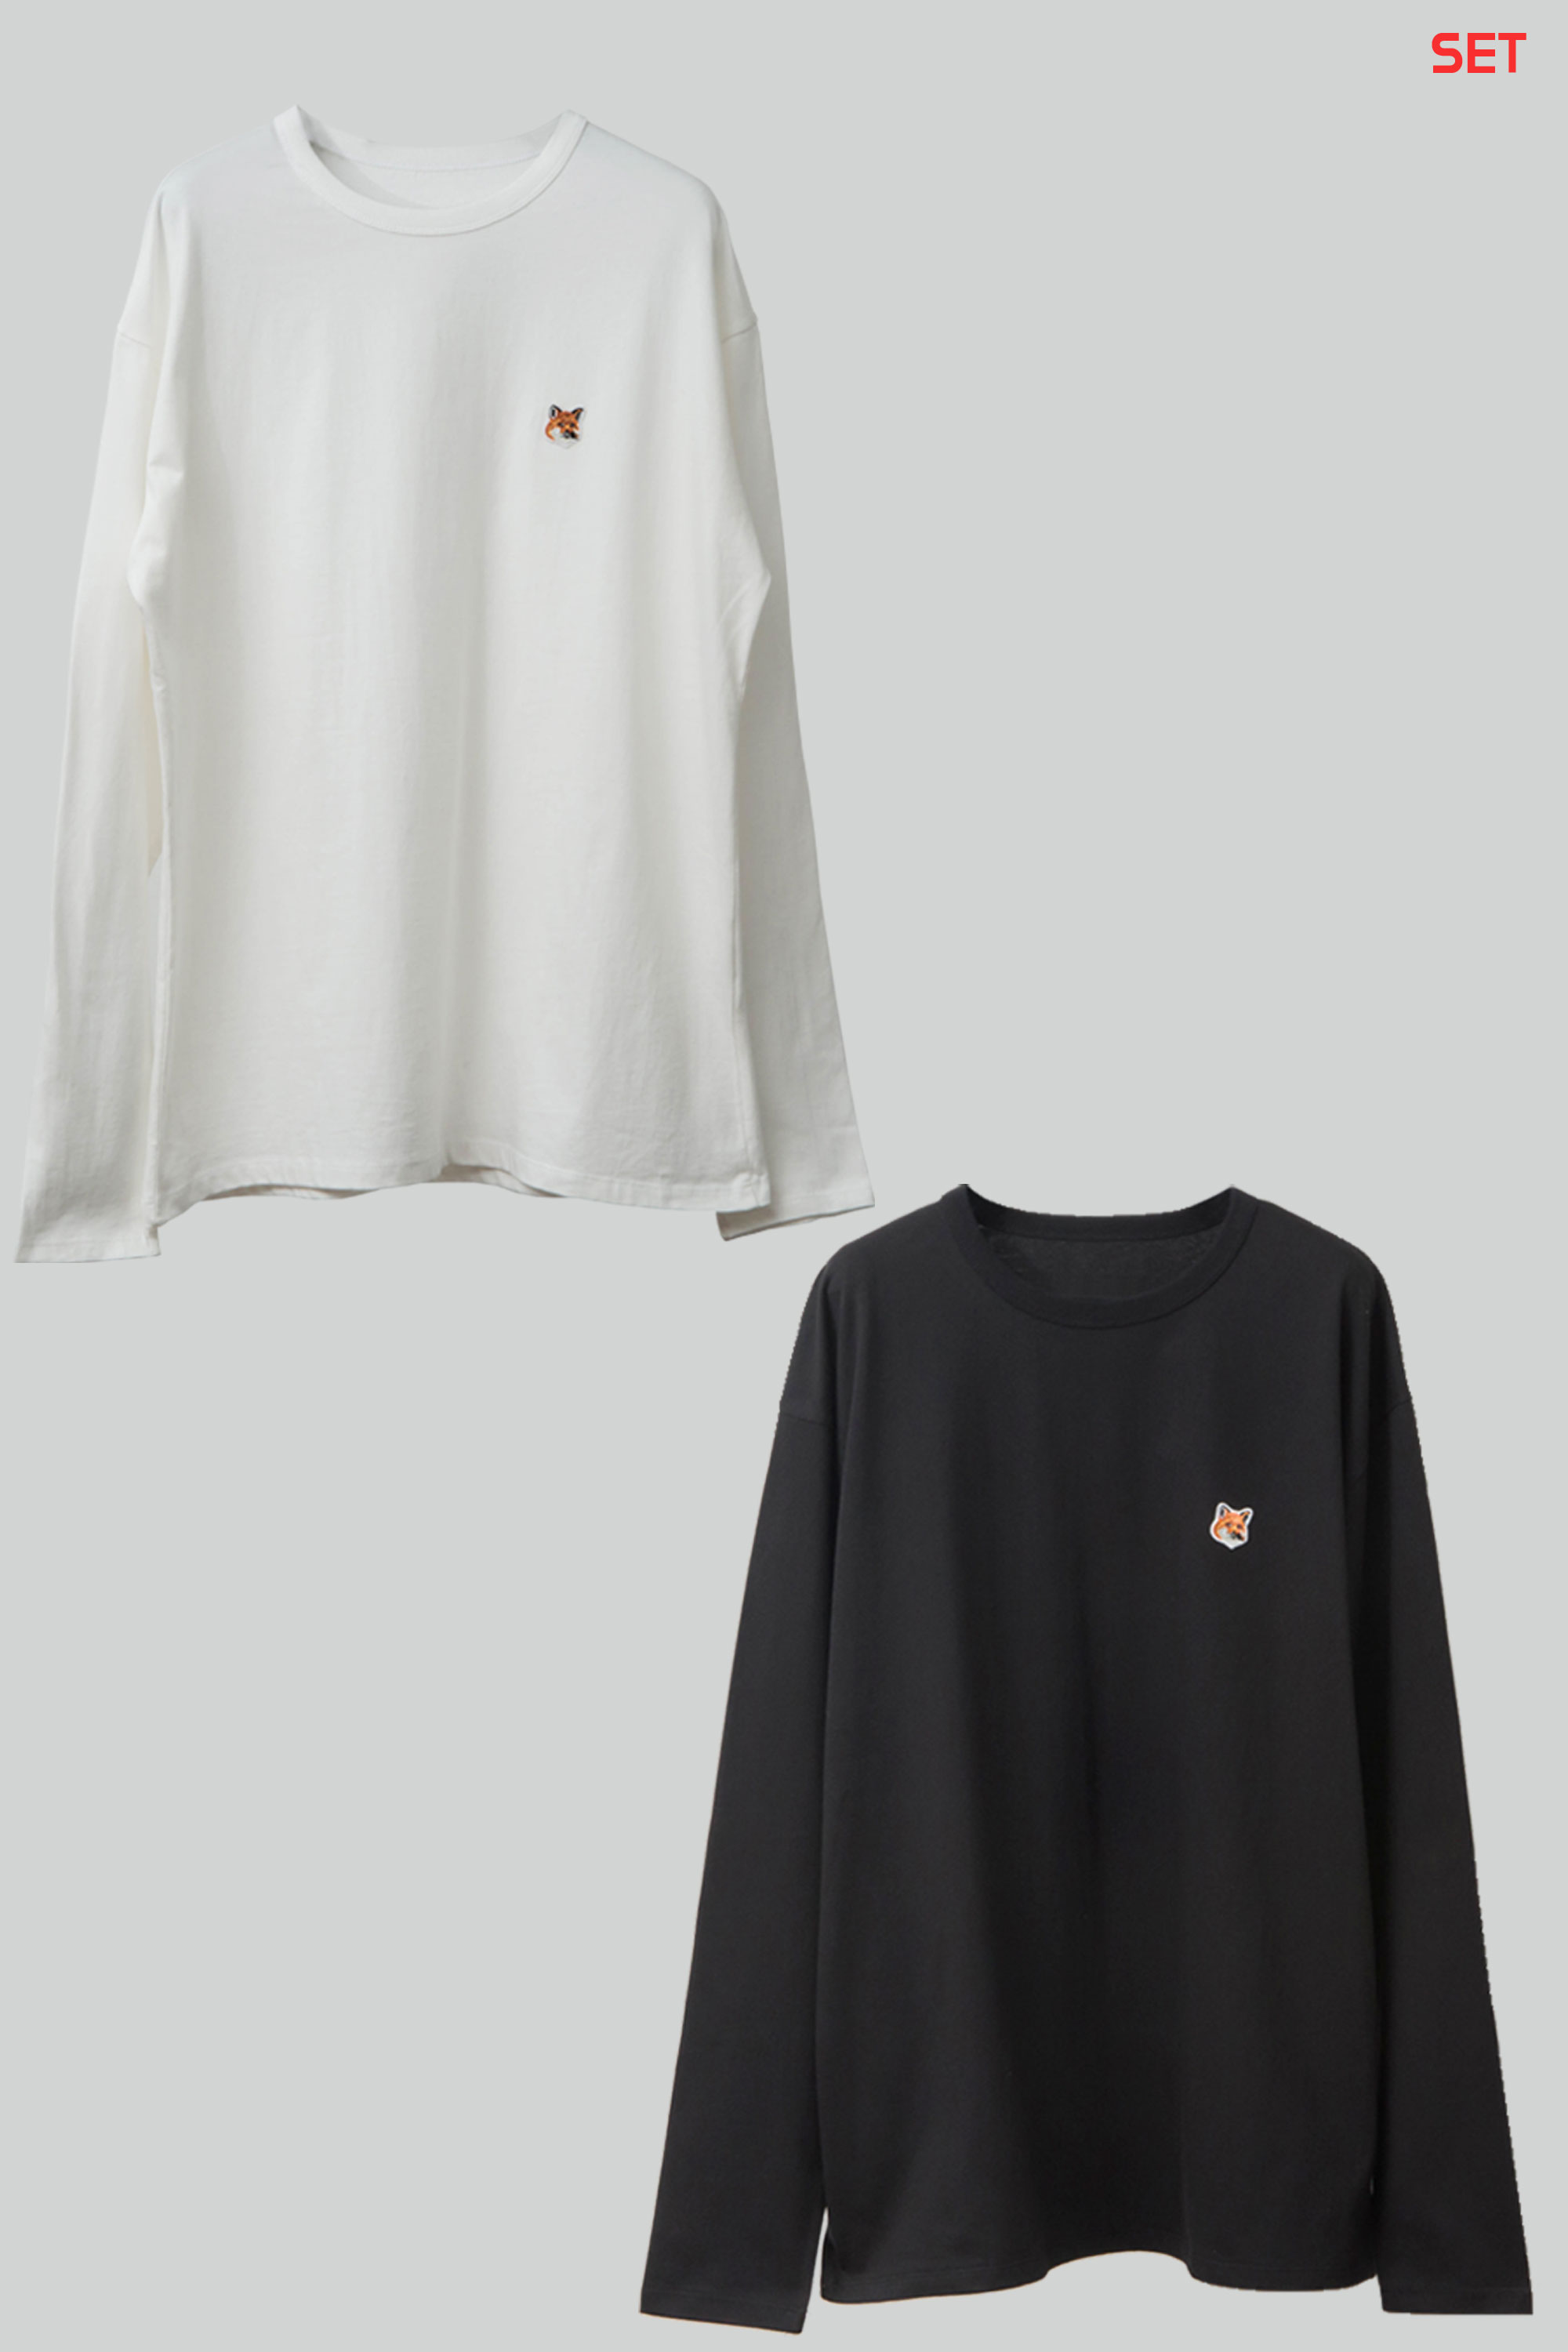 Unisex Long Sleeve Tee-Shirt Fox Head Patch  (White &amp; Black)   (GOLD FOX 자수 100% 작업)  프리미엄 코튼원단  당일발송 set구매시 5000원 할인